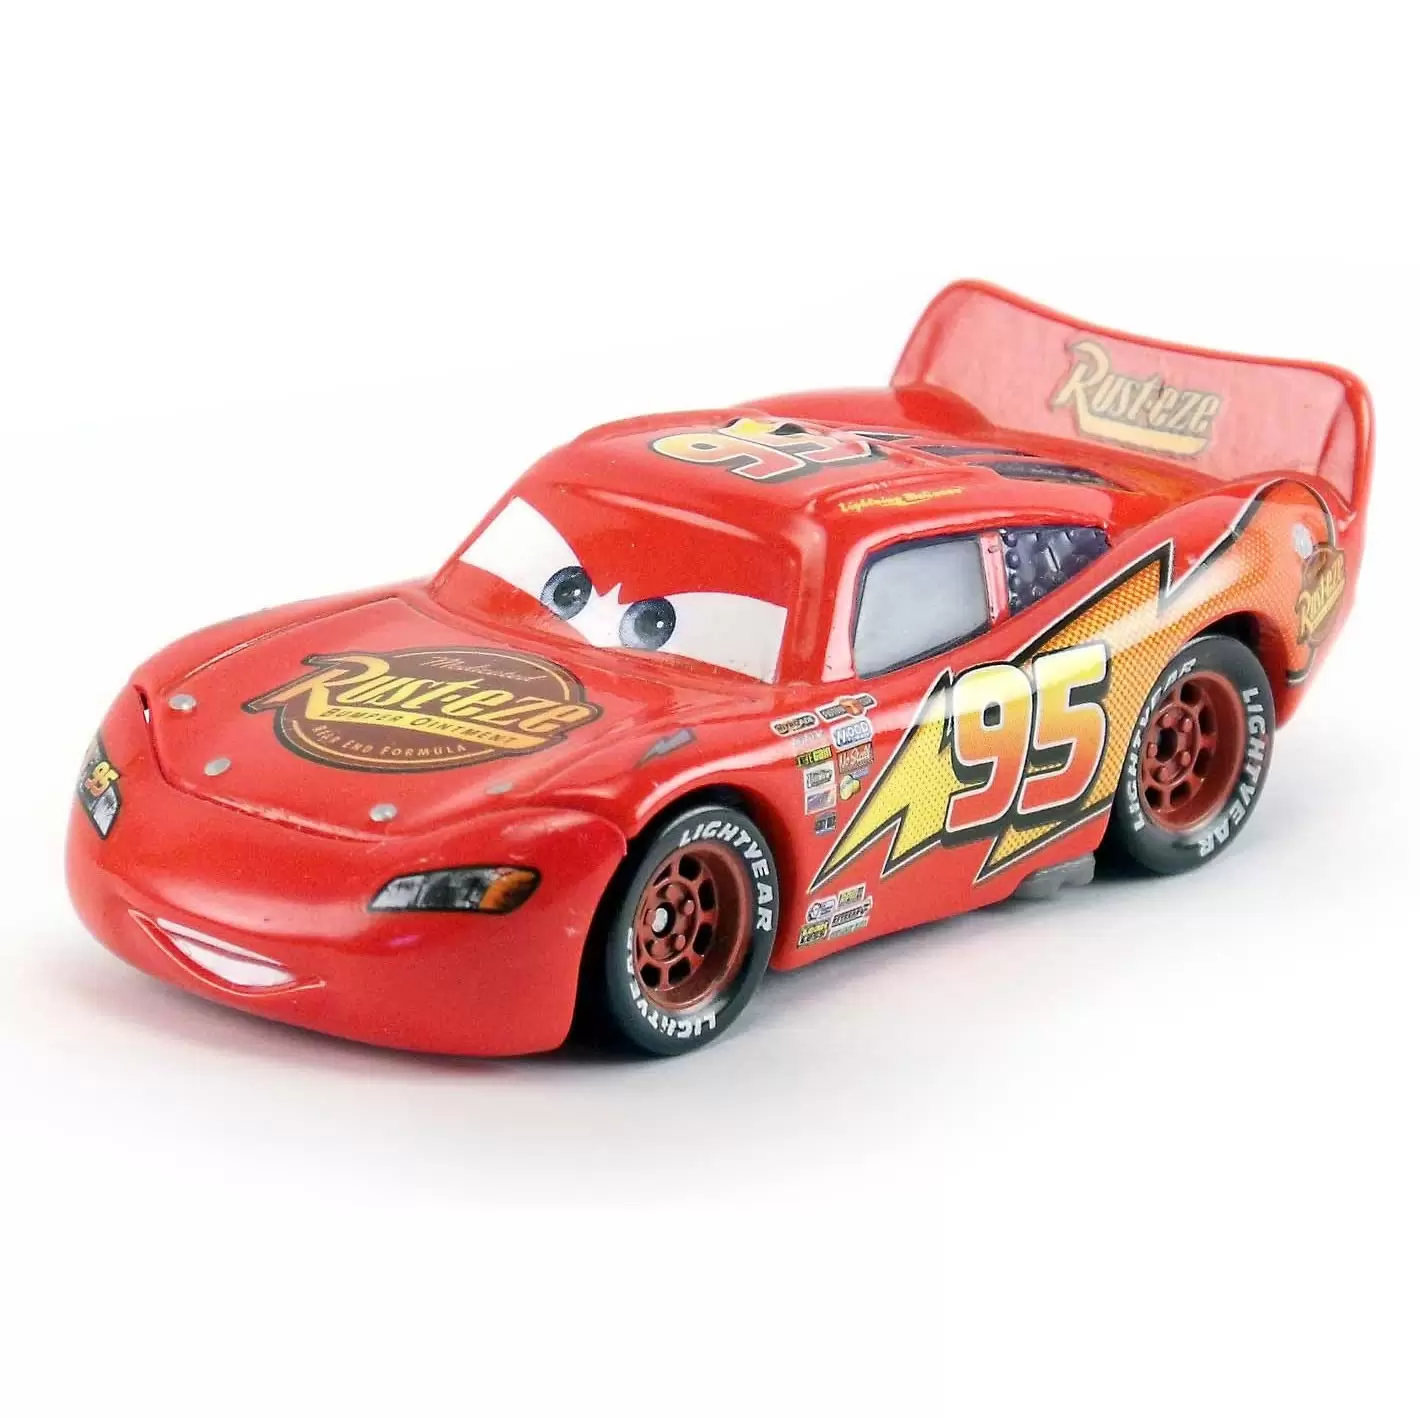 Cars 1 - Flash McQueen (with Rusteze sticker)